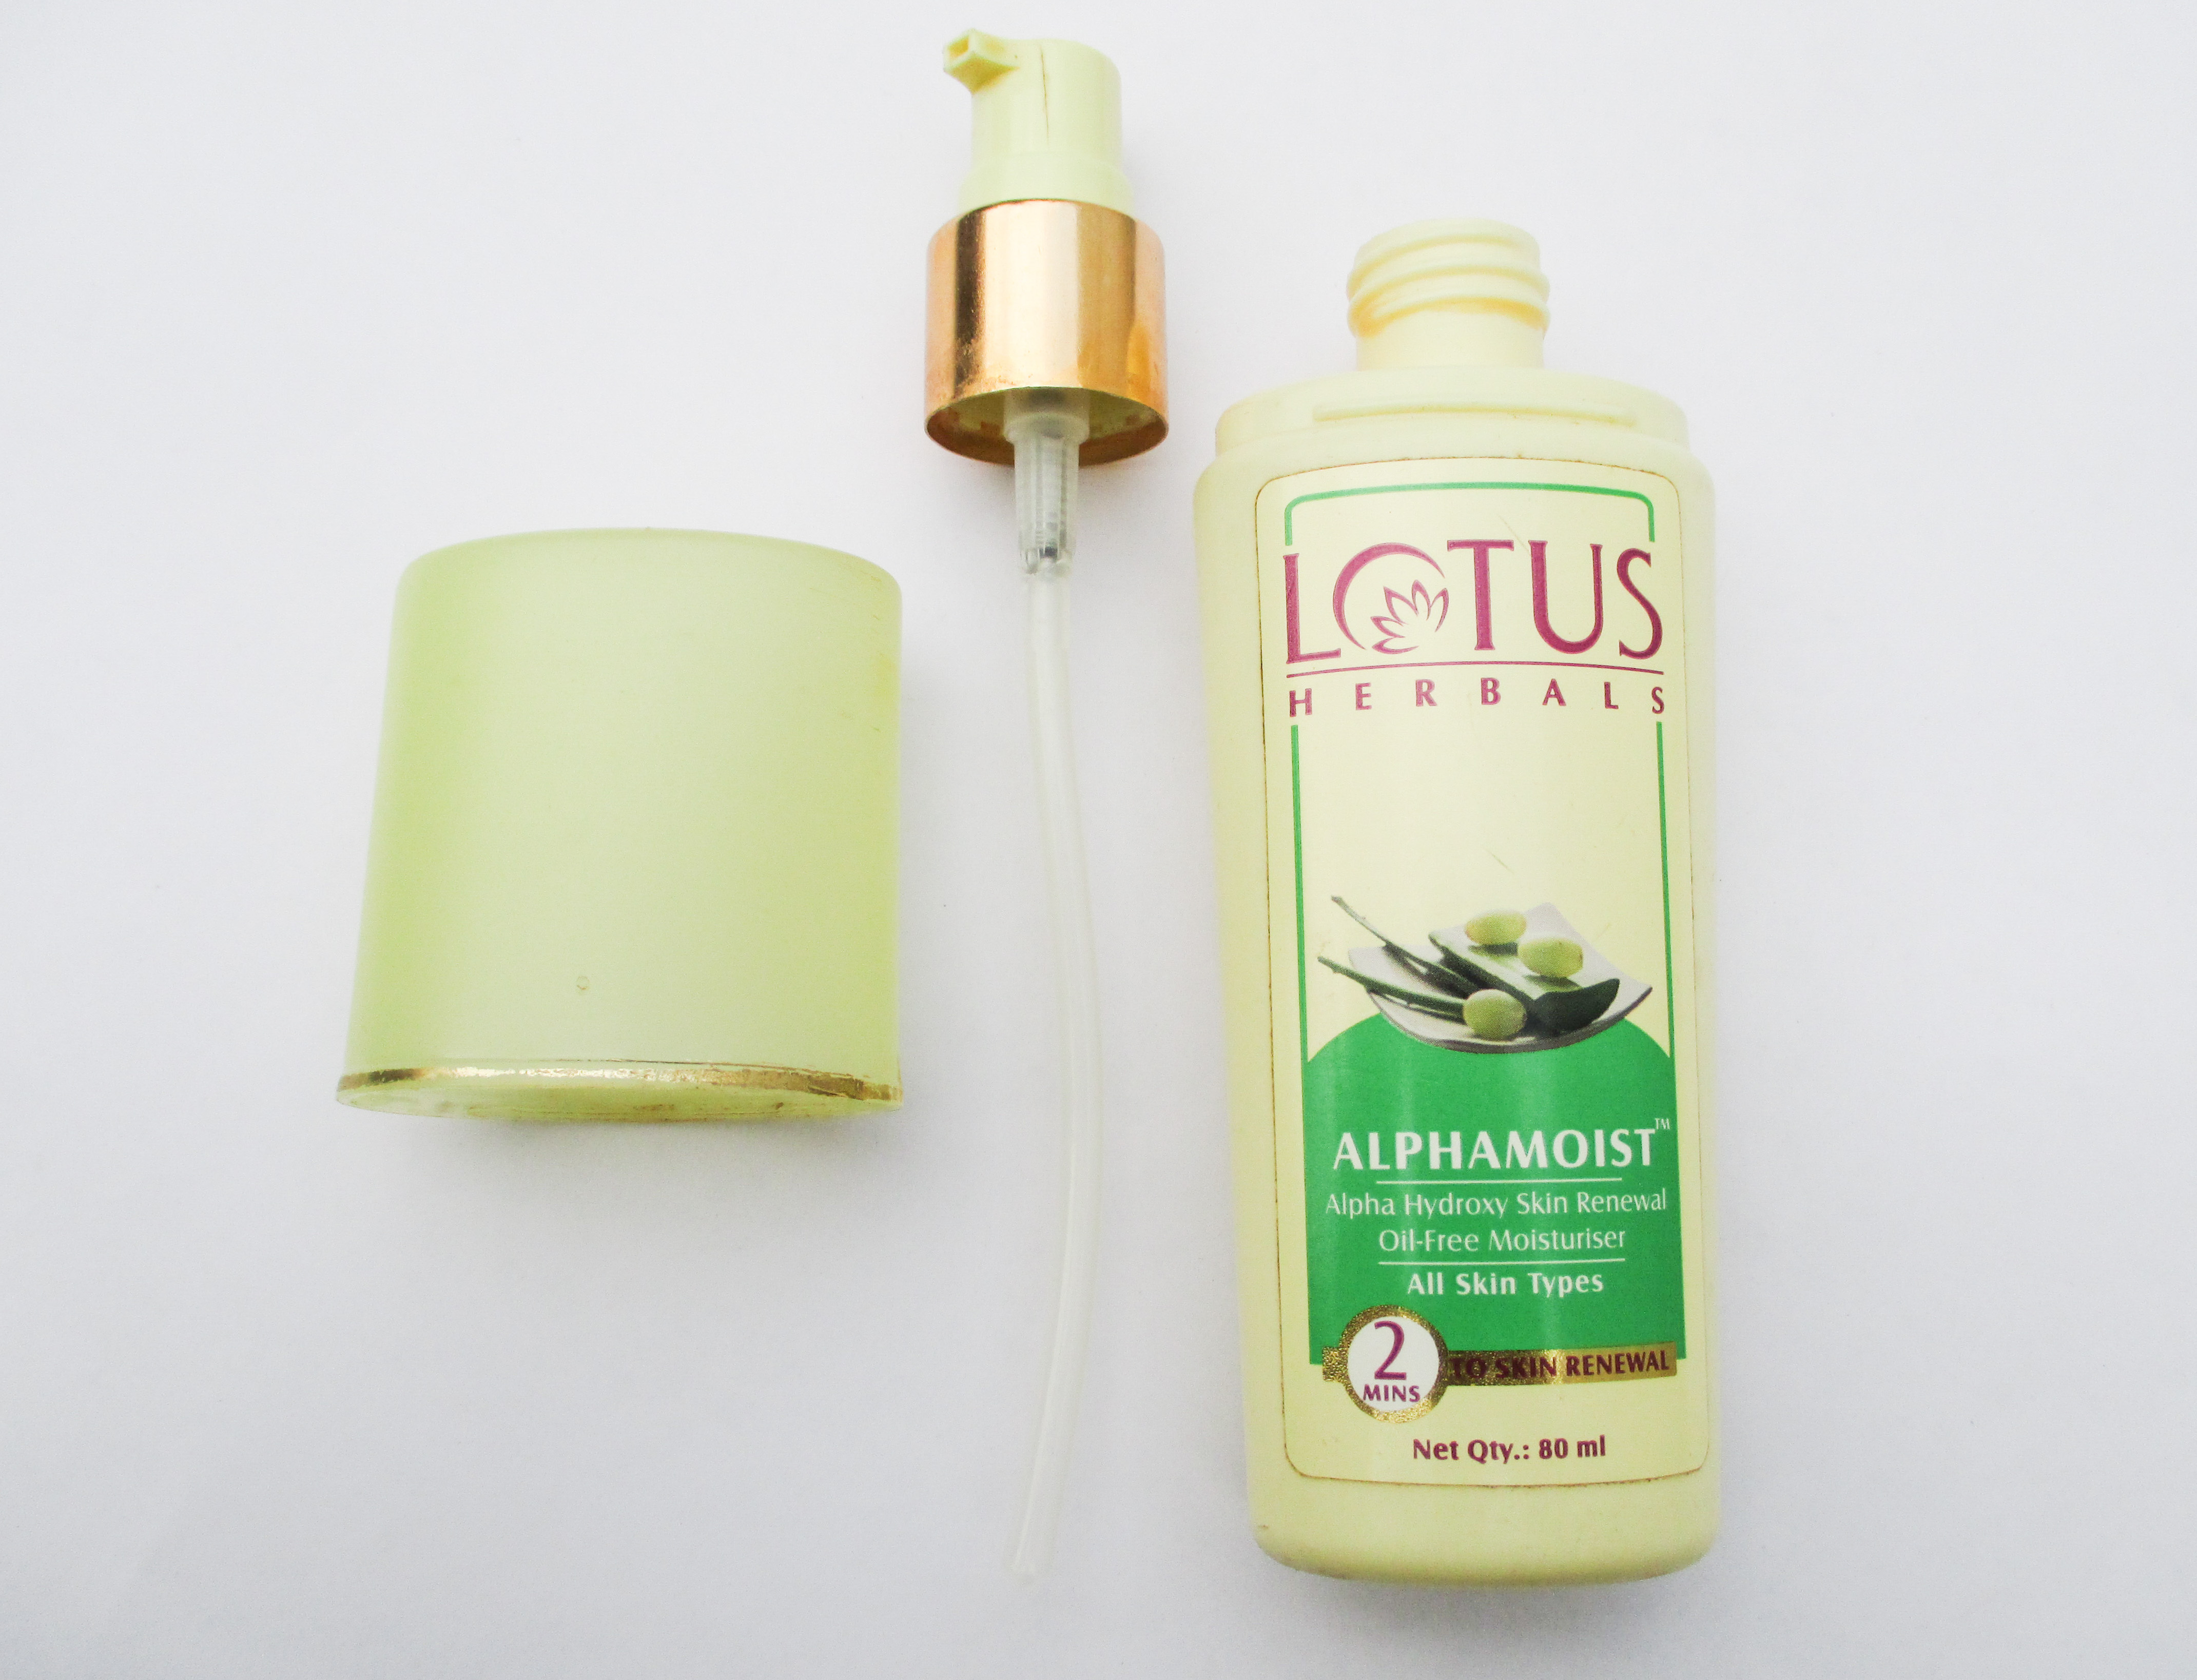 Lotus Herbals Alphamoist Alpha Hydroxy Skin Renewal Oil-Free Moisturiser